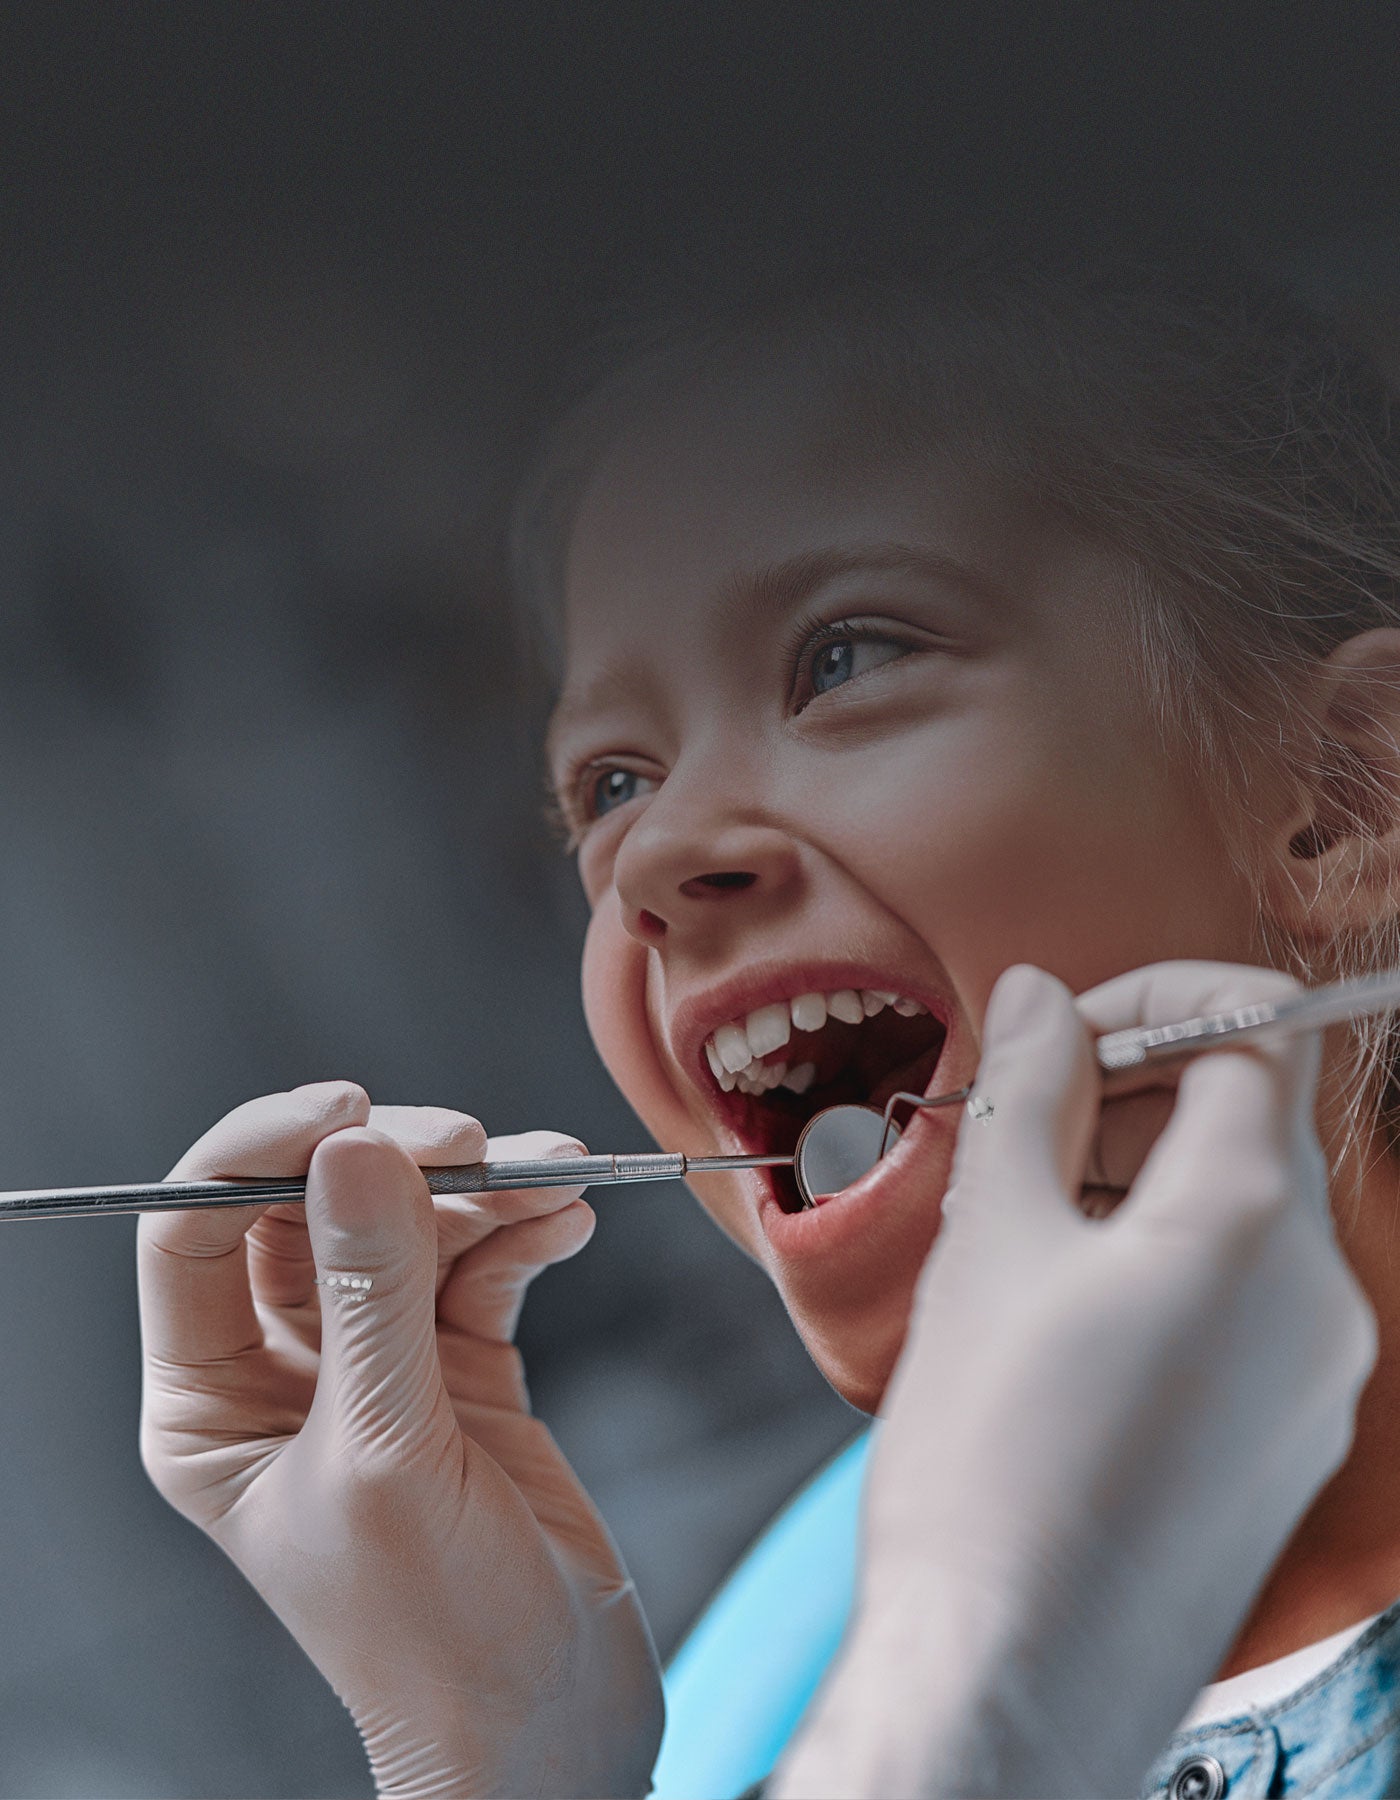 Child having dental check up